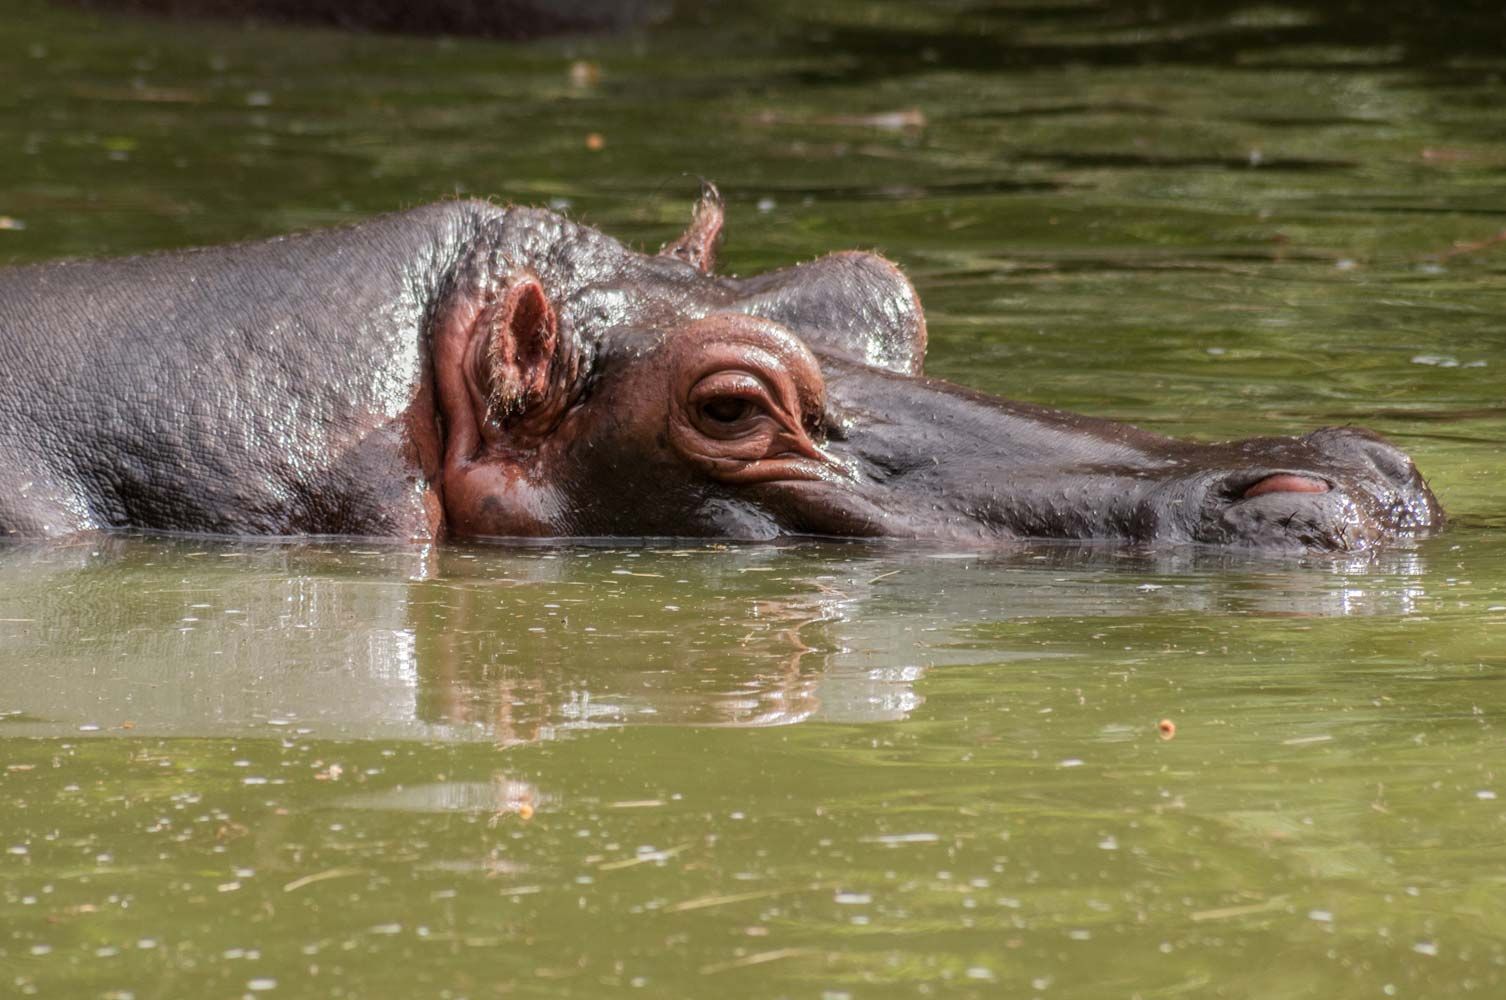 Detail Images Of A Hippopotamus Nomer 29